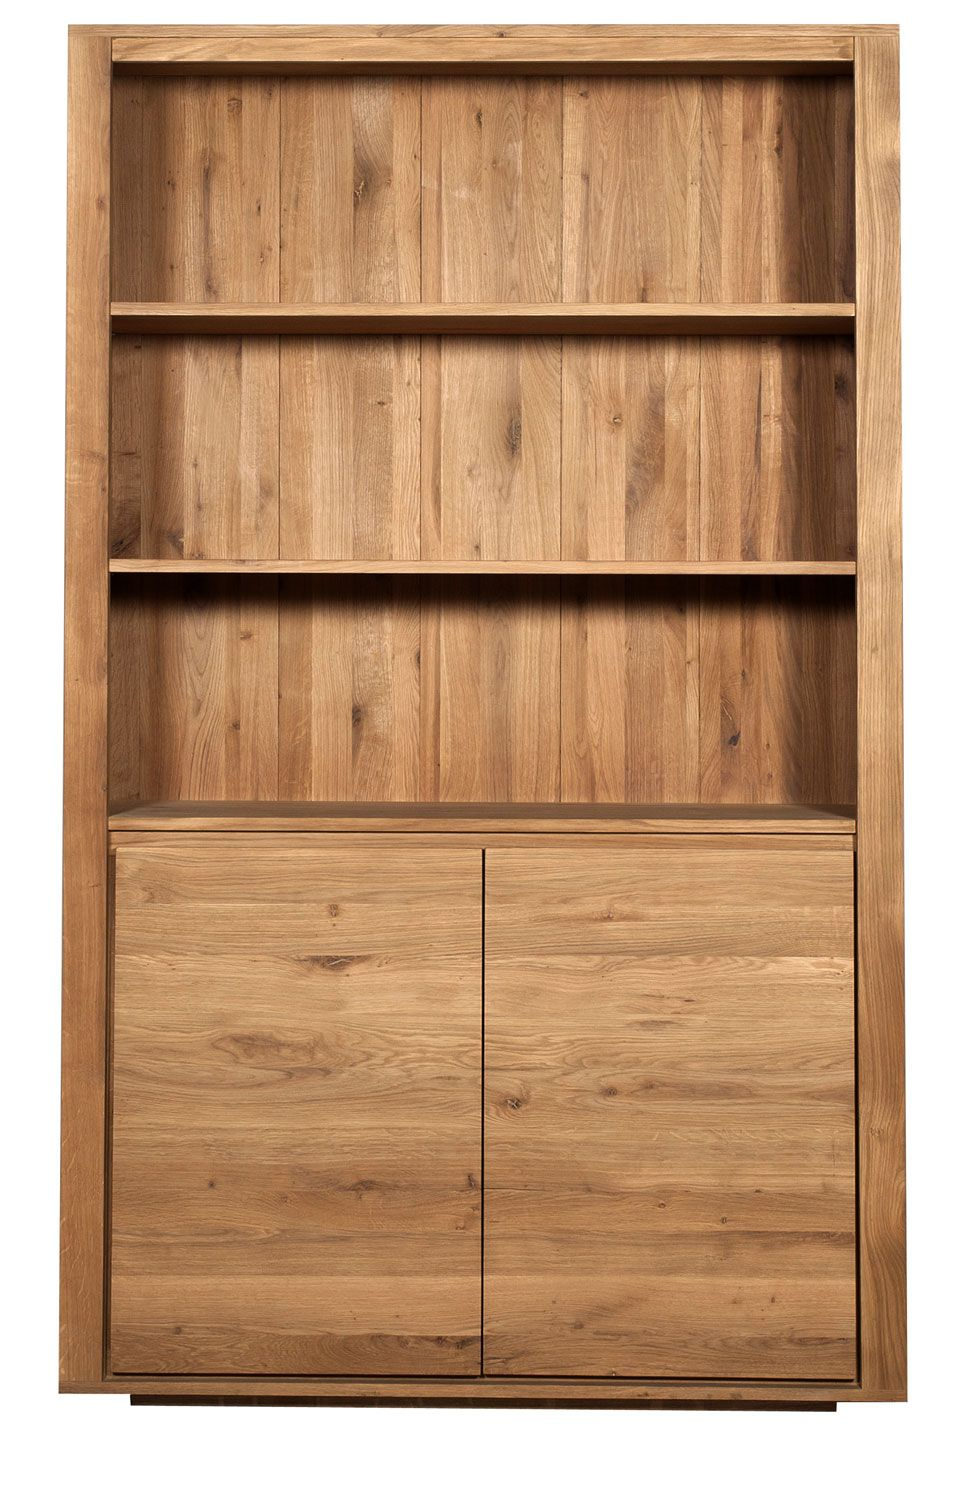 Ethnicraft Shadow Oak Book Rack 2 Doors Solid Wood within sizing 965 X 1500